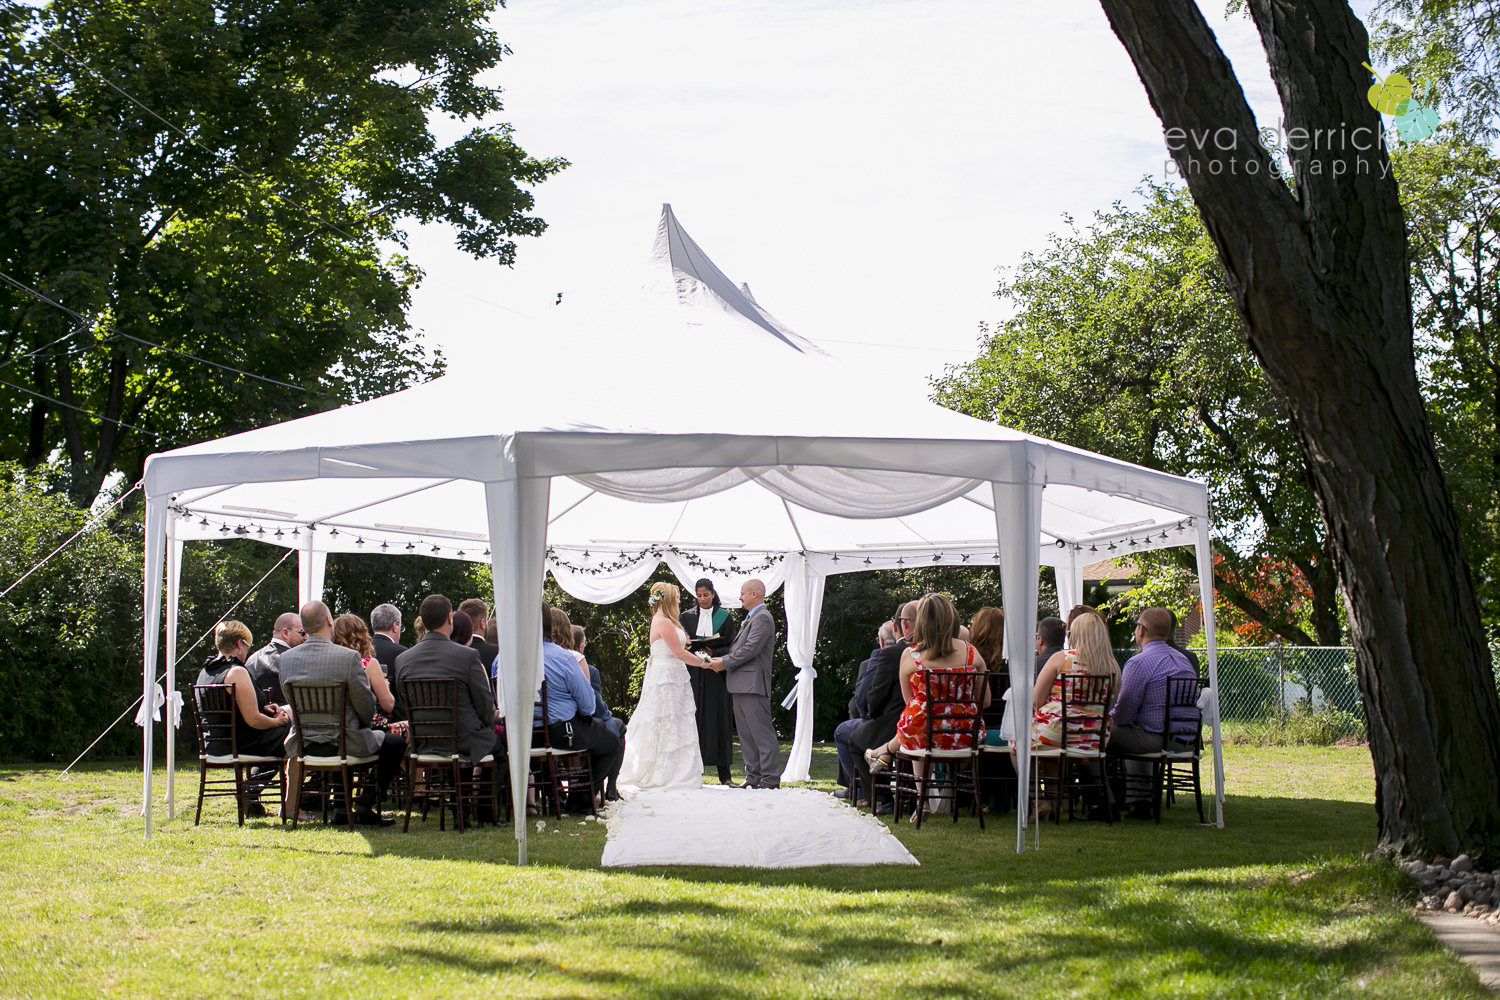 Burlington-Weddings-intimate-weddings-Blacktree-Restaurant-wedding-photo-by-eva-derrick-photography-020.JPG